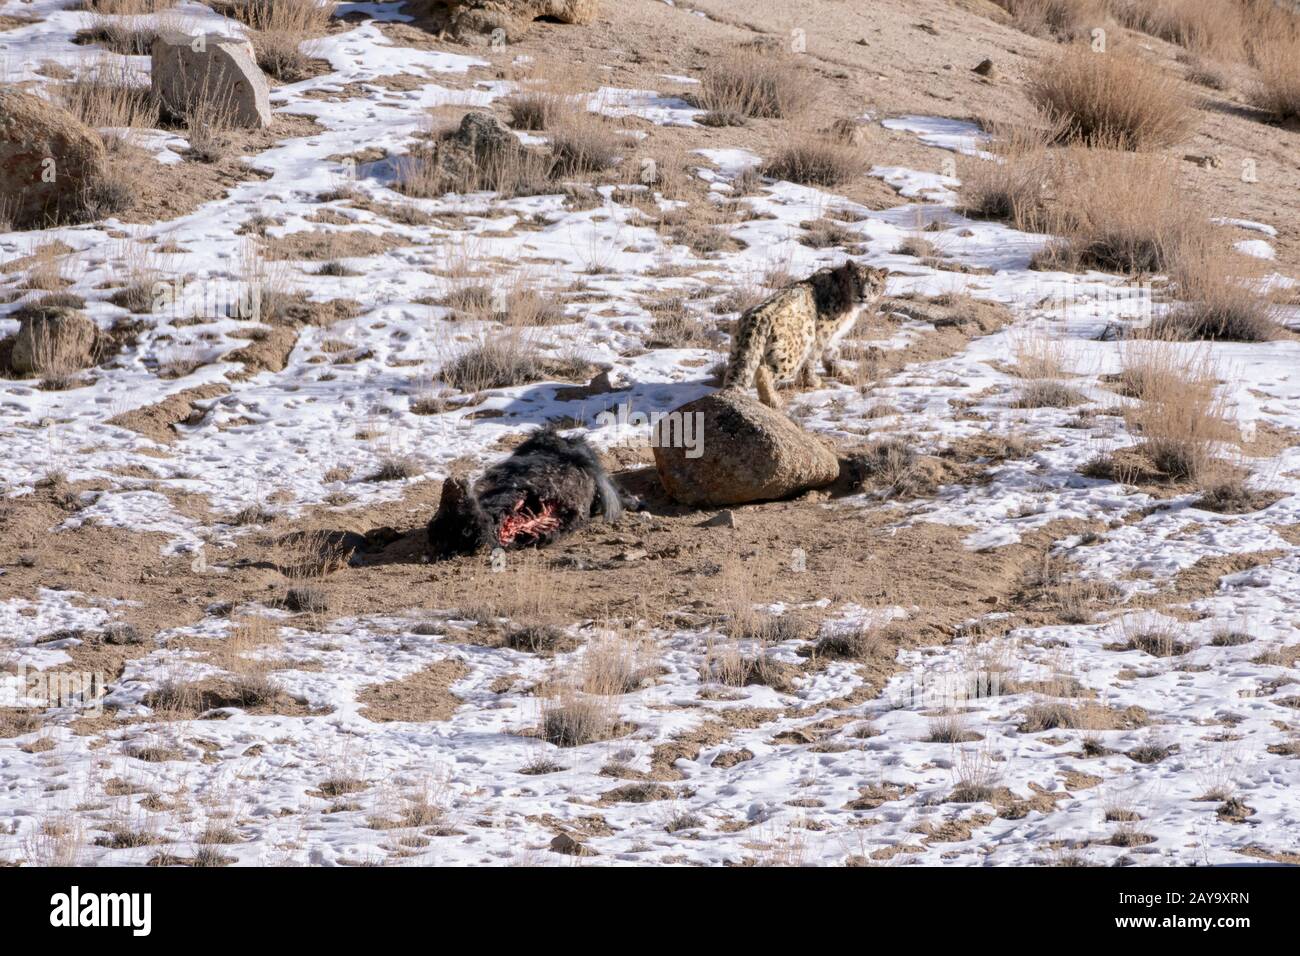 Snow leopard (Panthera unica) leaving its yak carcass, Ulley, Ladakh, India Stock Photo